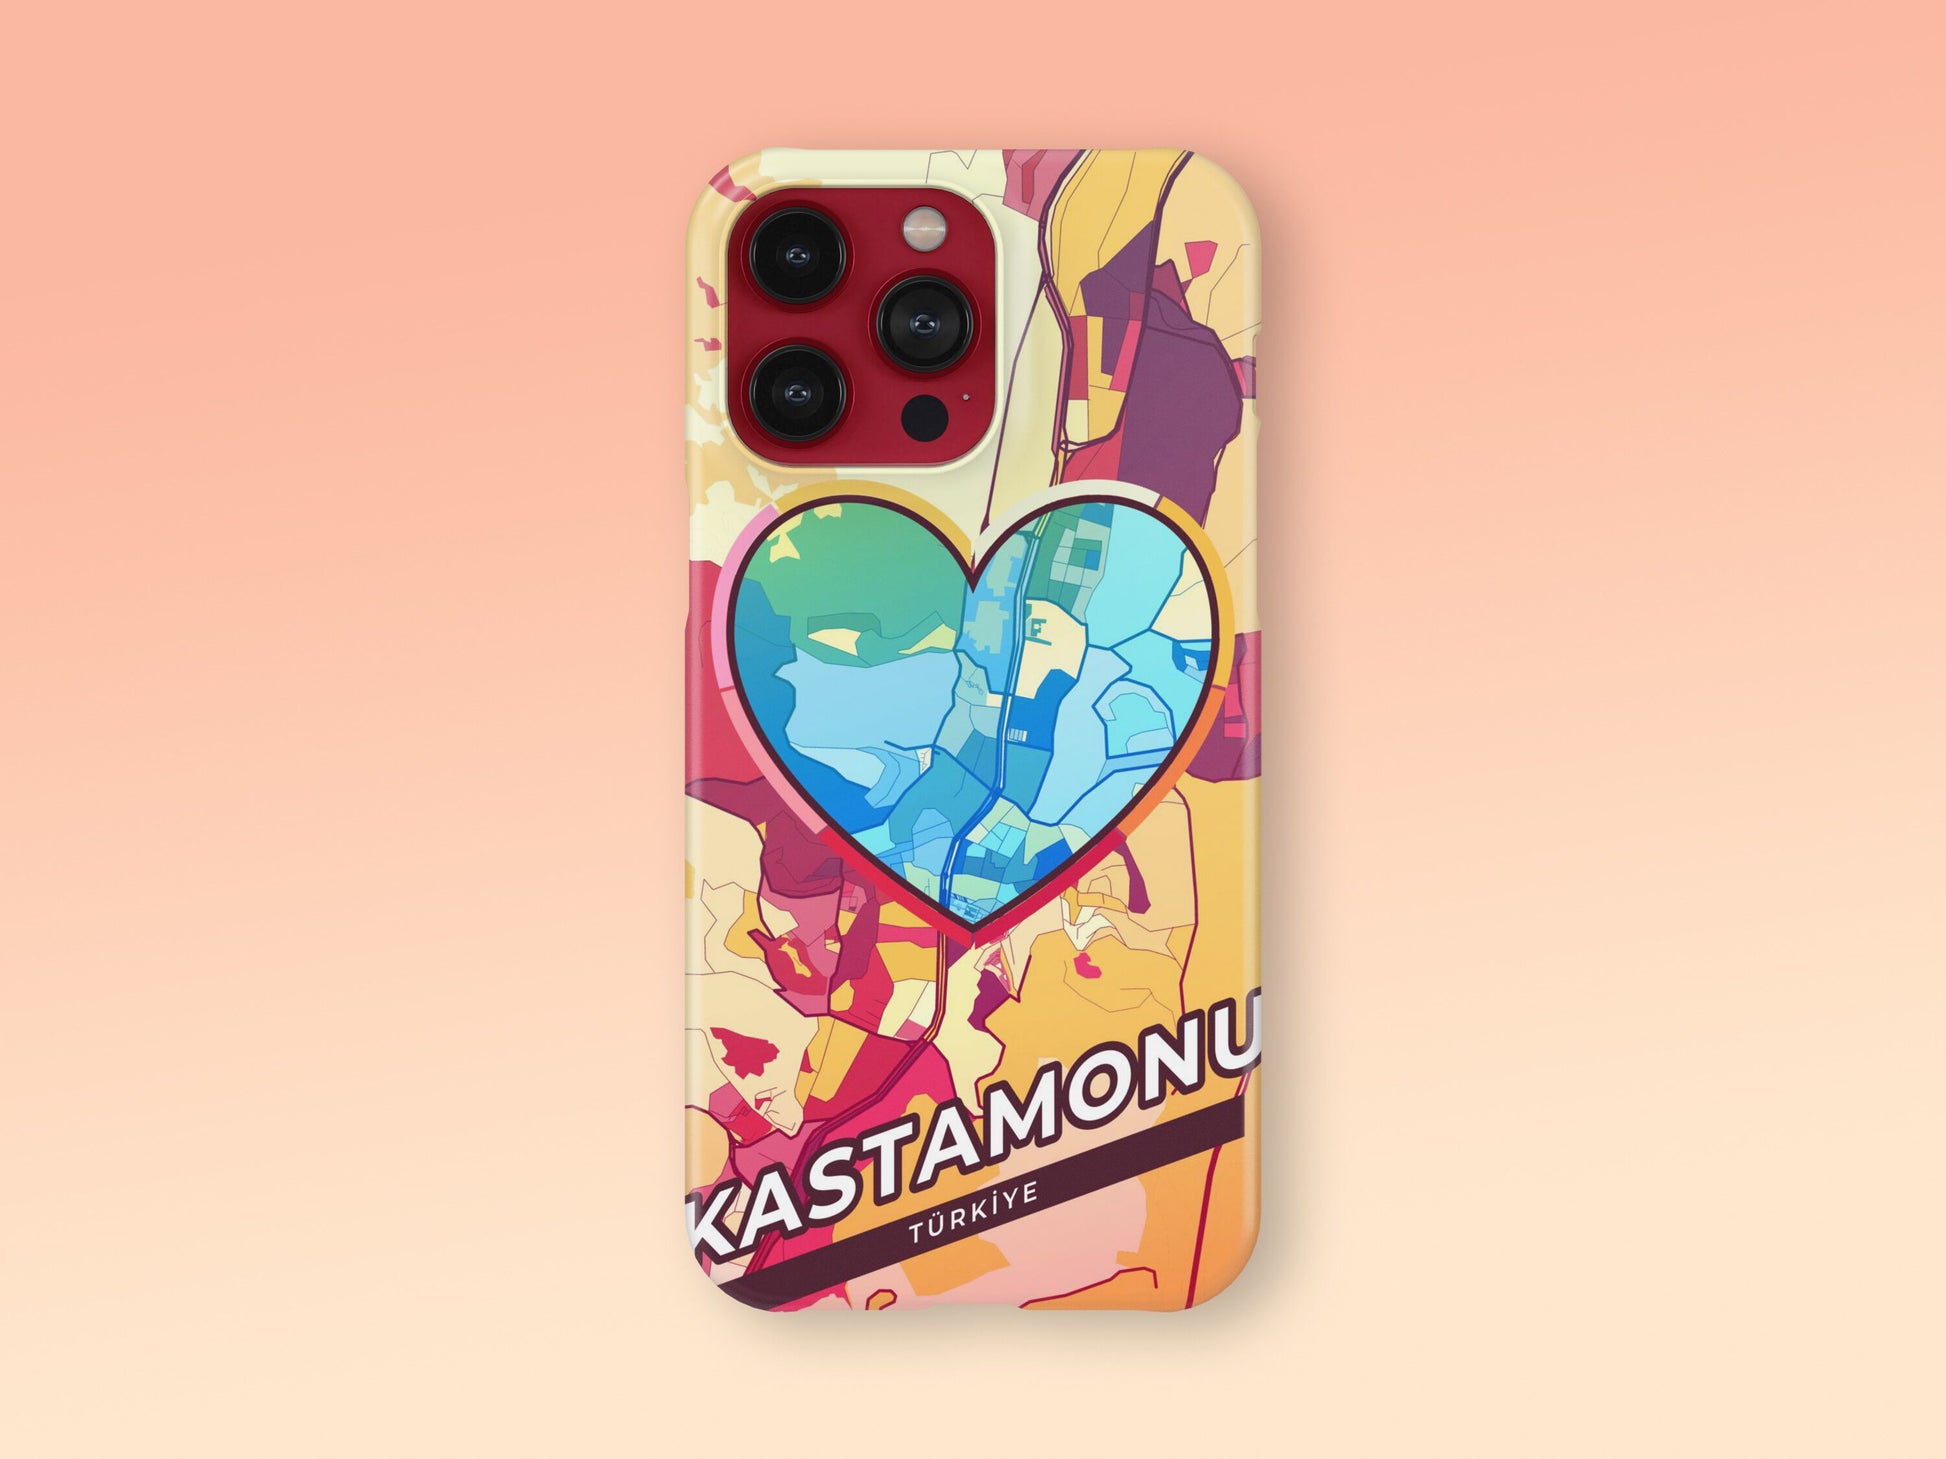 Kastamonu Turkey slim phone case with colorful icon. Birthday, wedding or housewarming gift. Couple match cases. 2